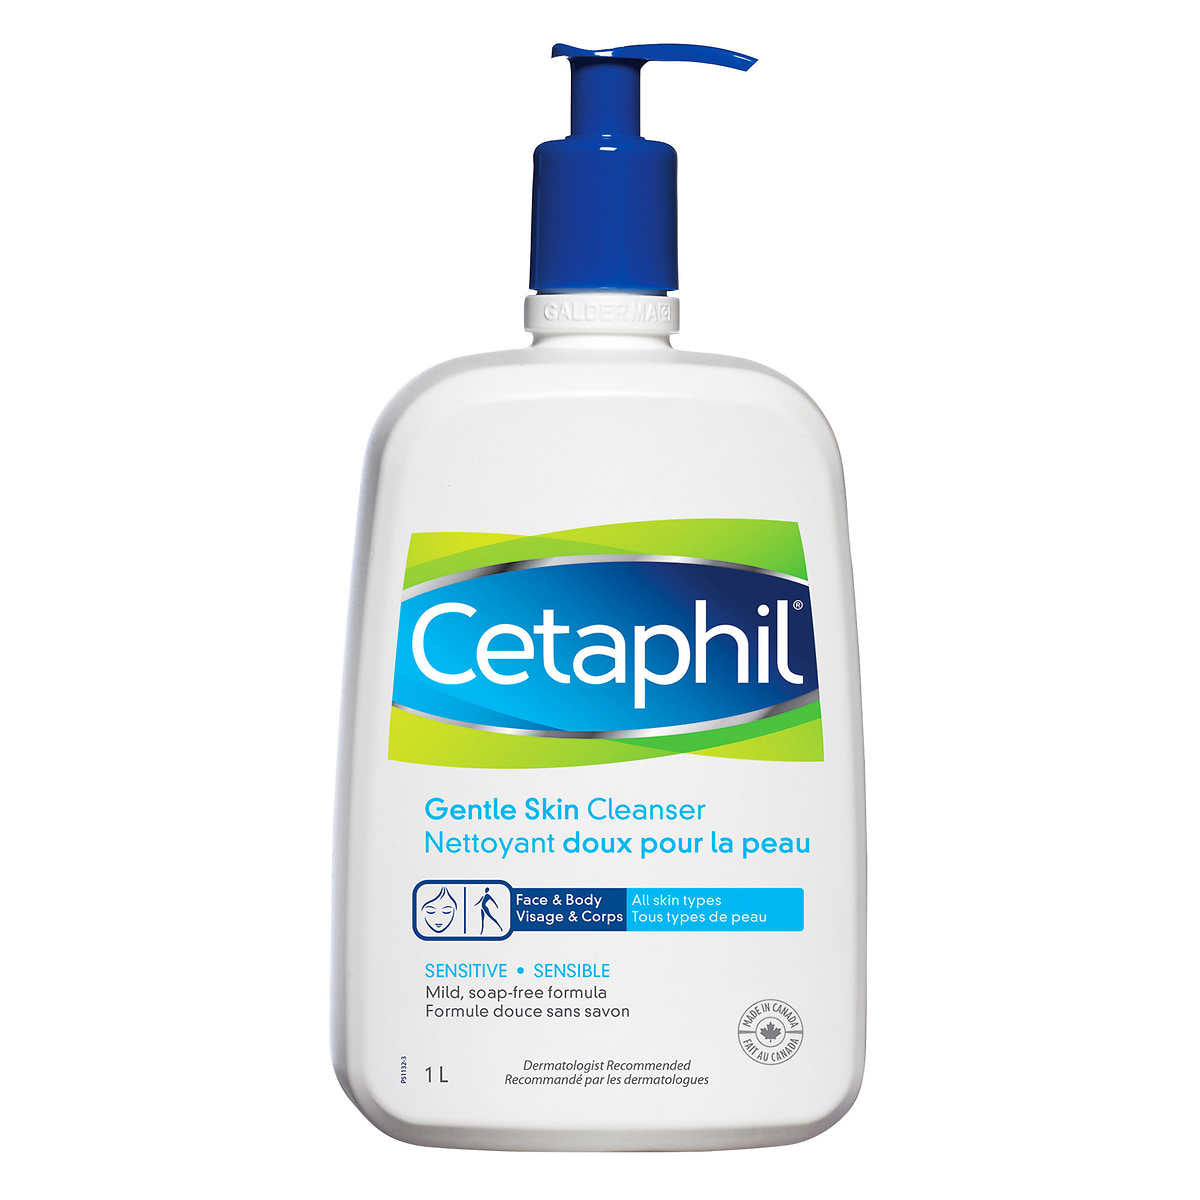 Cetaphil Sensitive Gentle Skin Cleanser, 1L